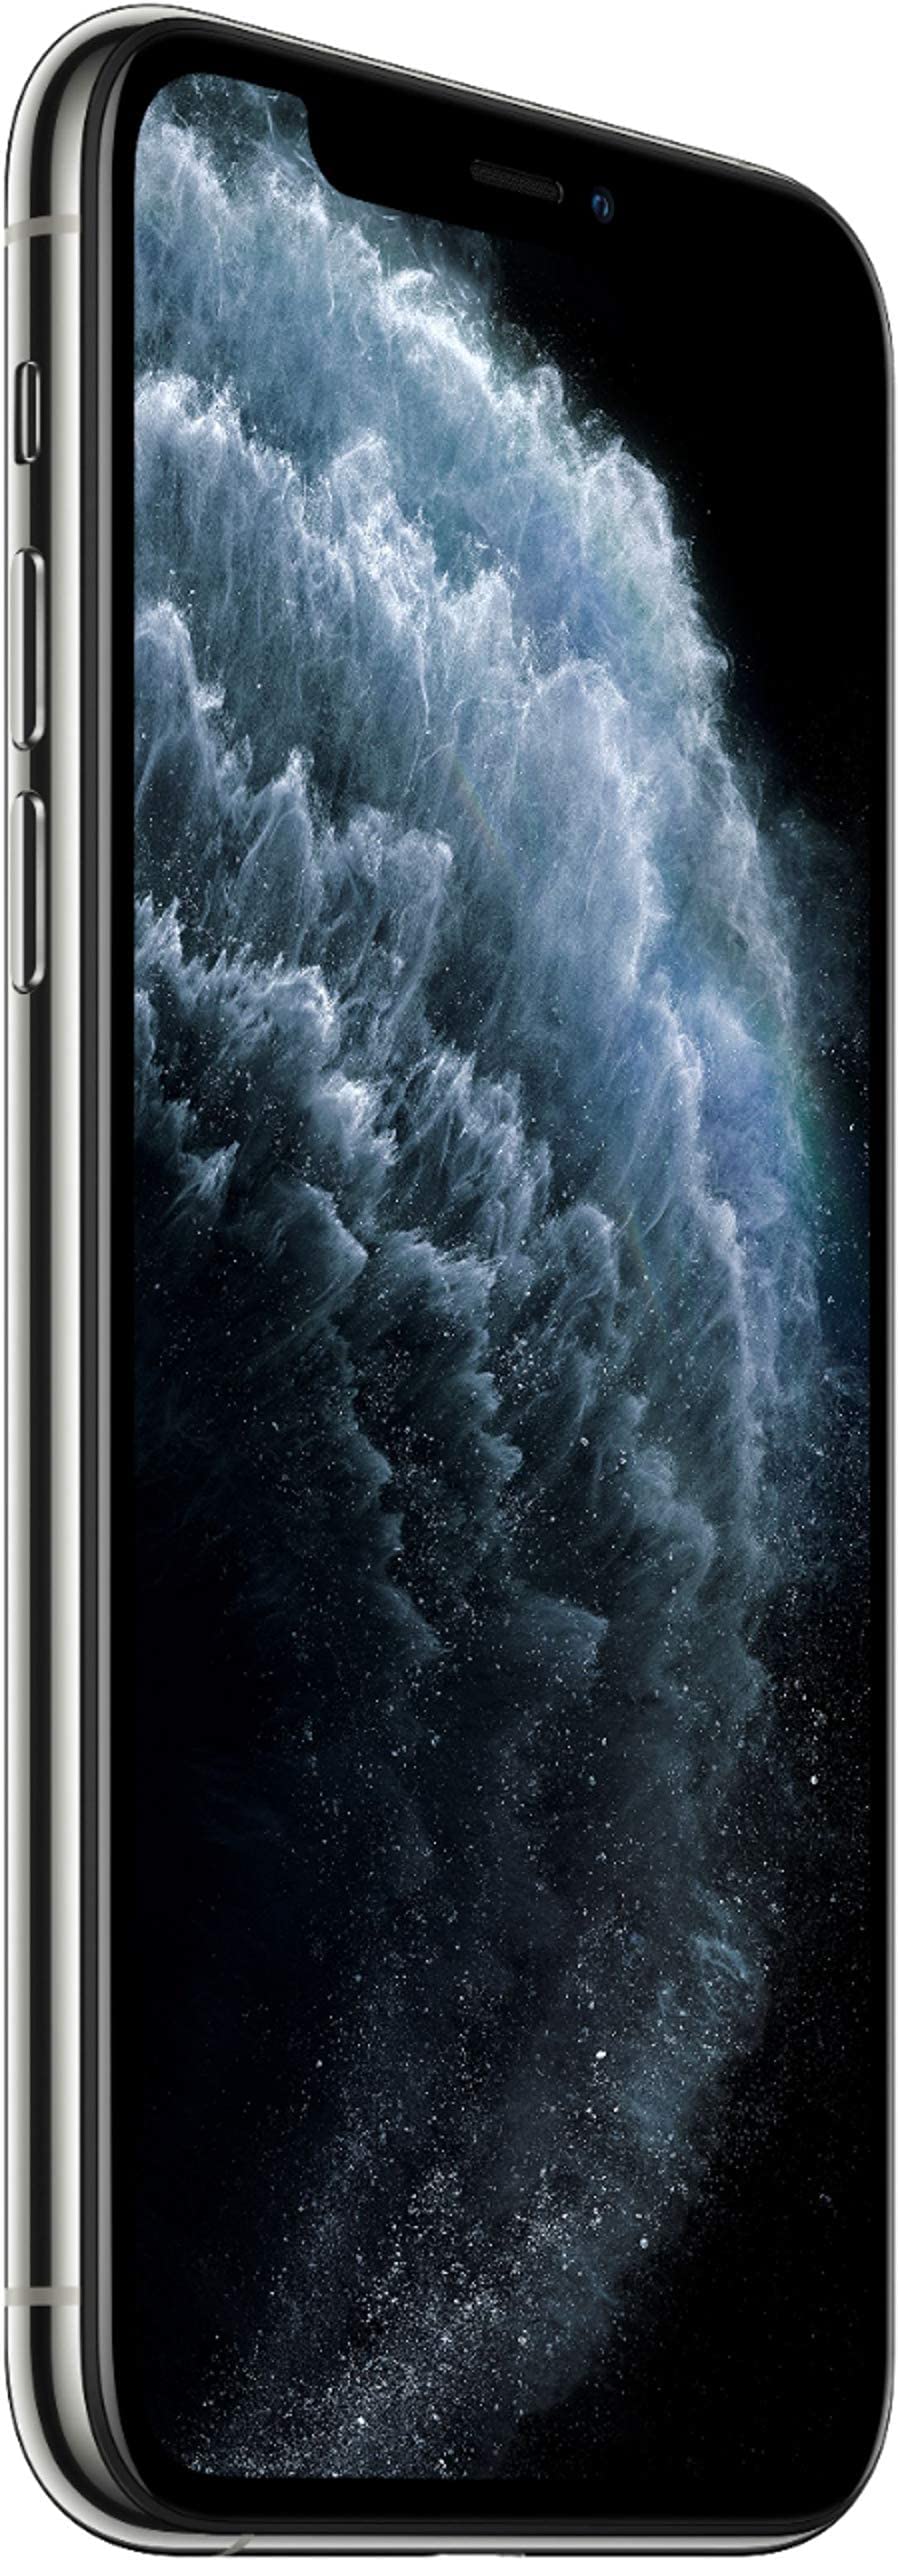 Apple iPhone 11 Pro Max, 512GB, Silver - Fully Unlocked (Renewed Premium)